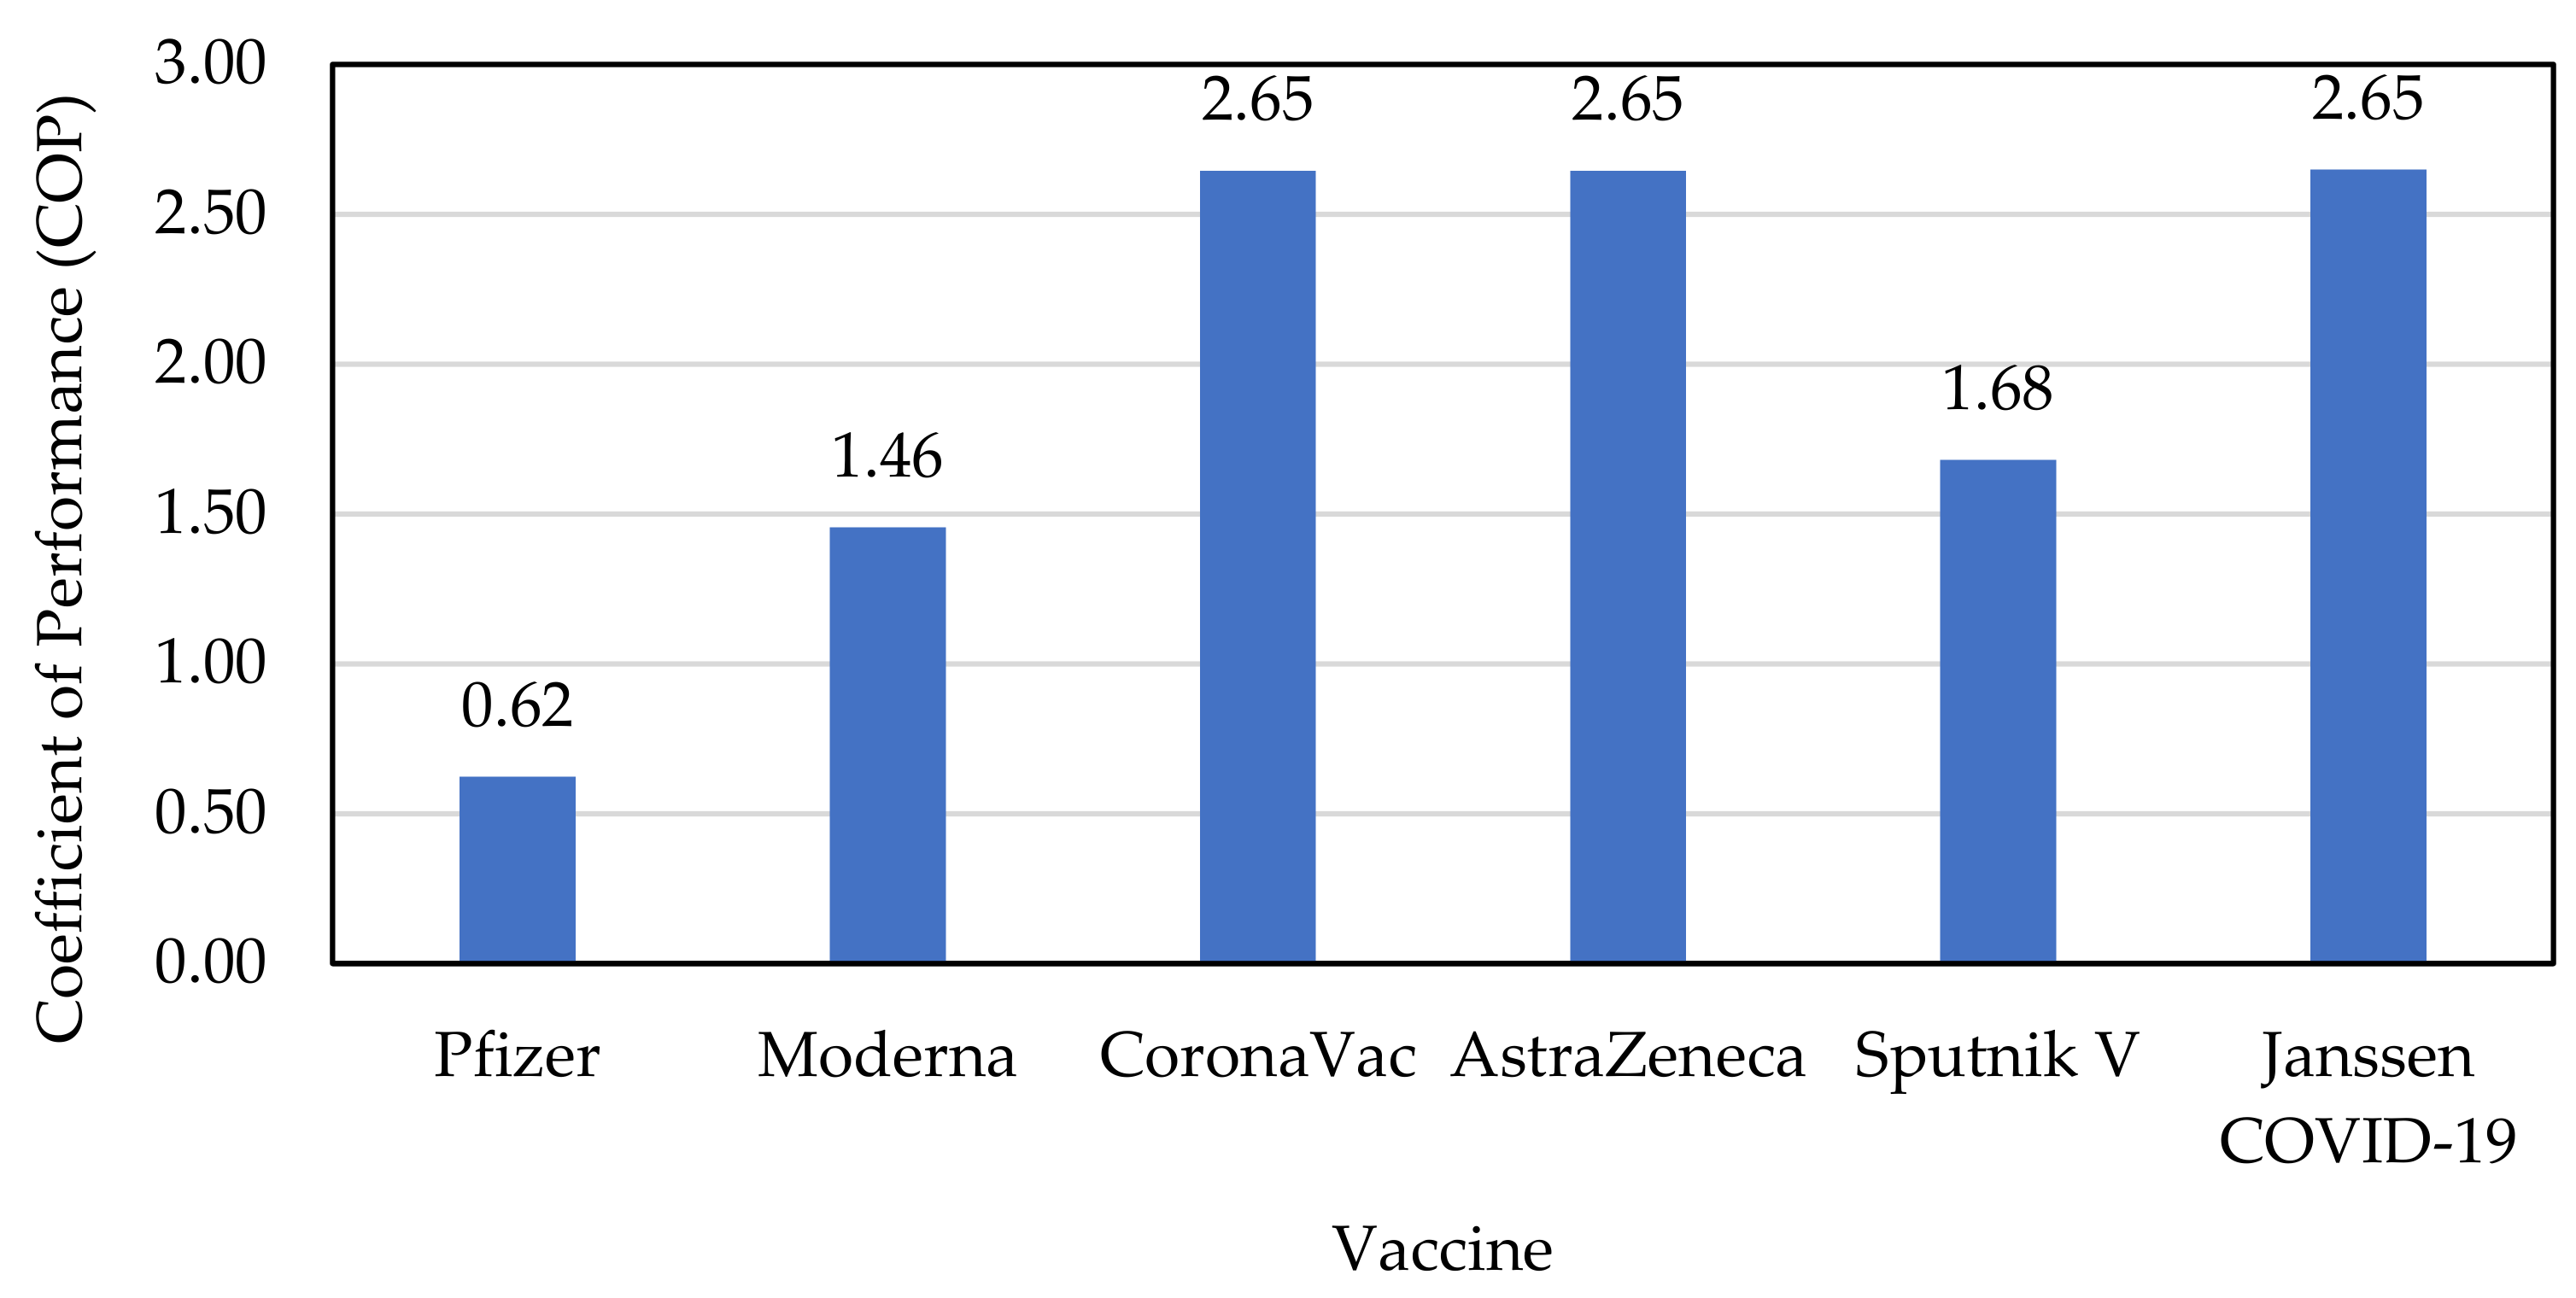 Moderna COVID-19 Vaccine Storage Capacity for Refrigerators